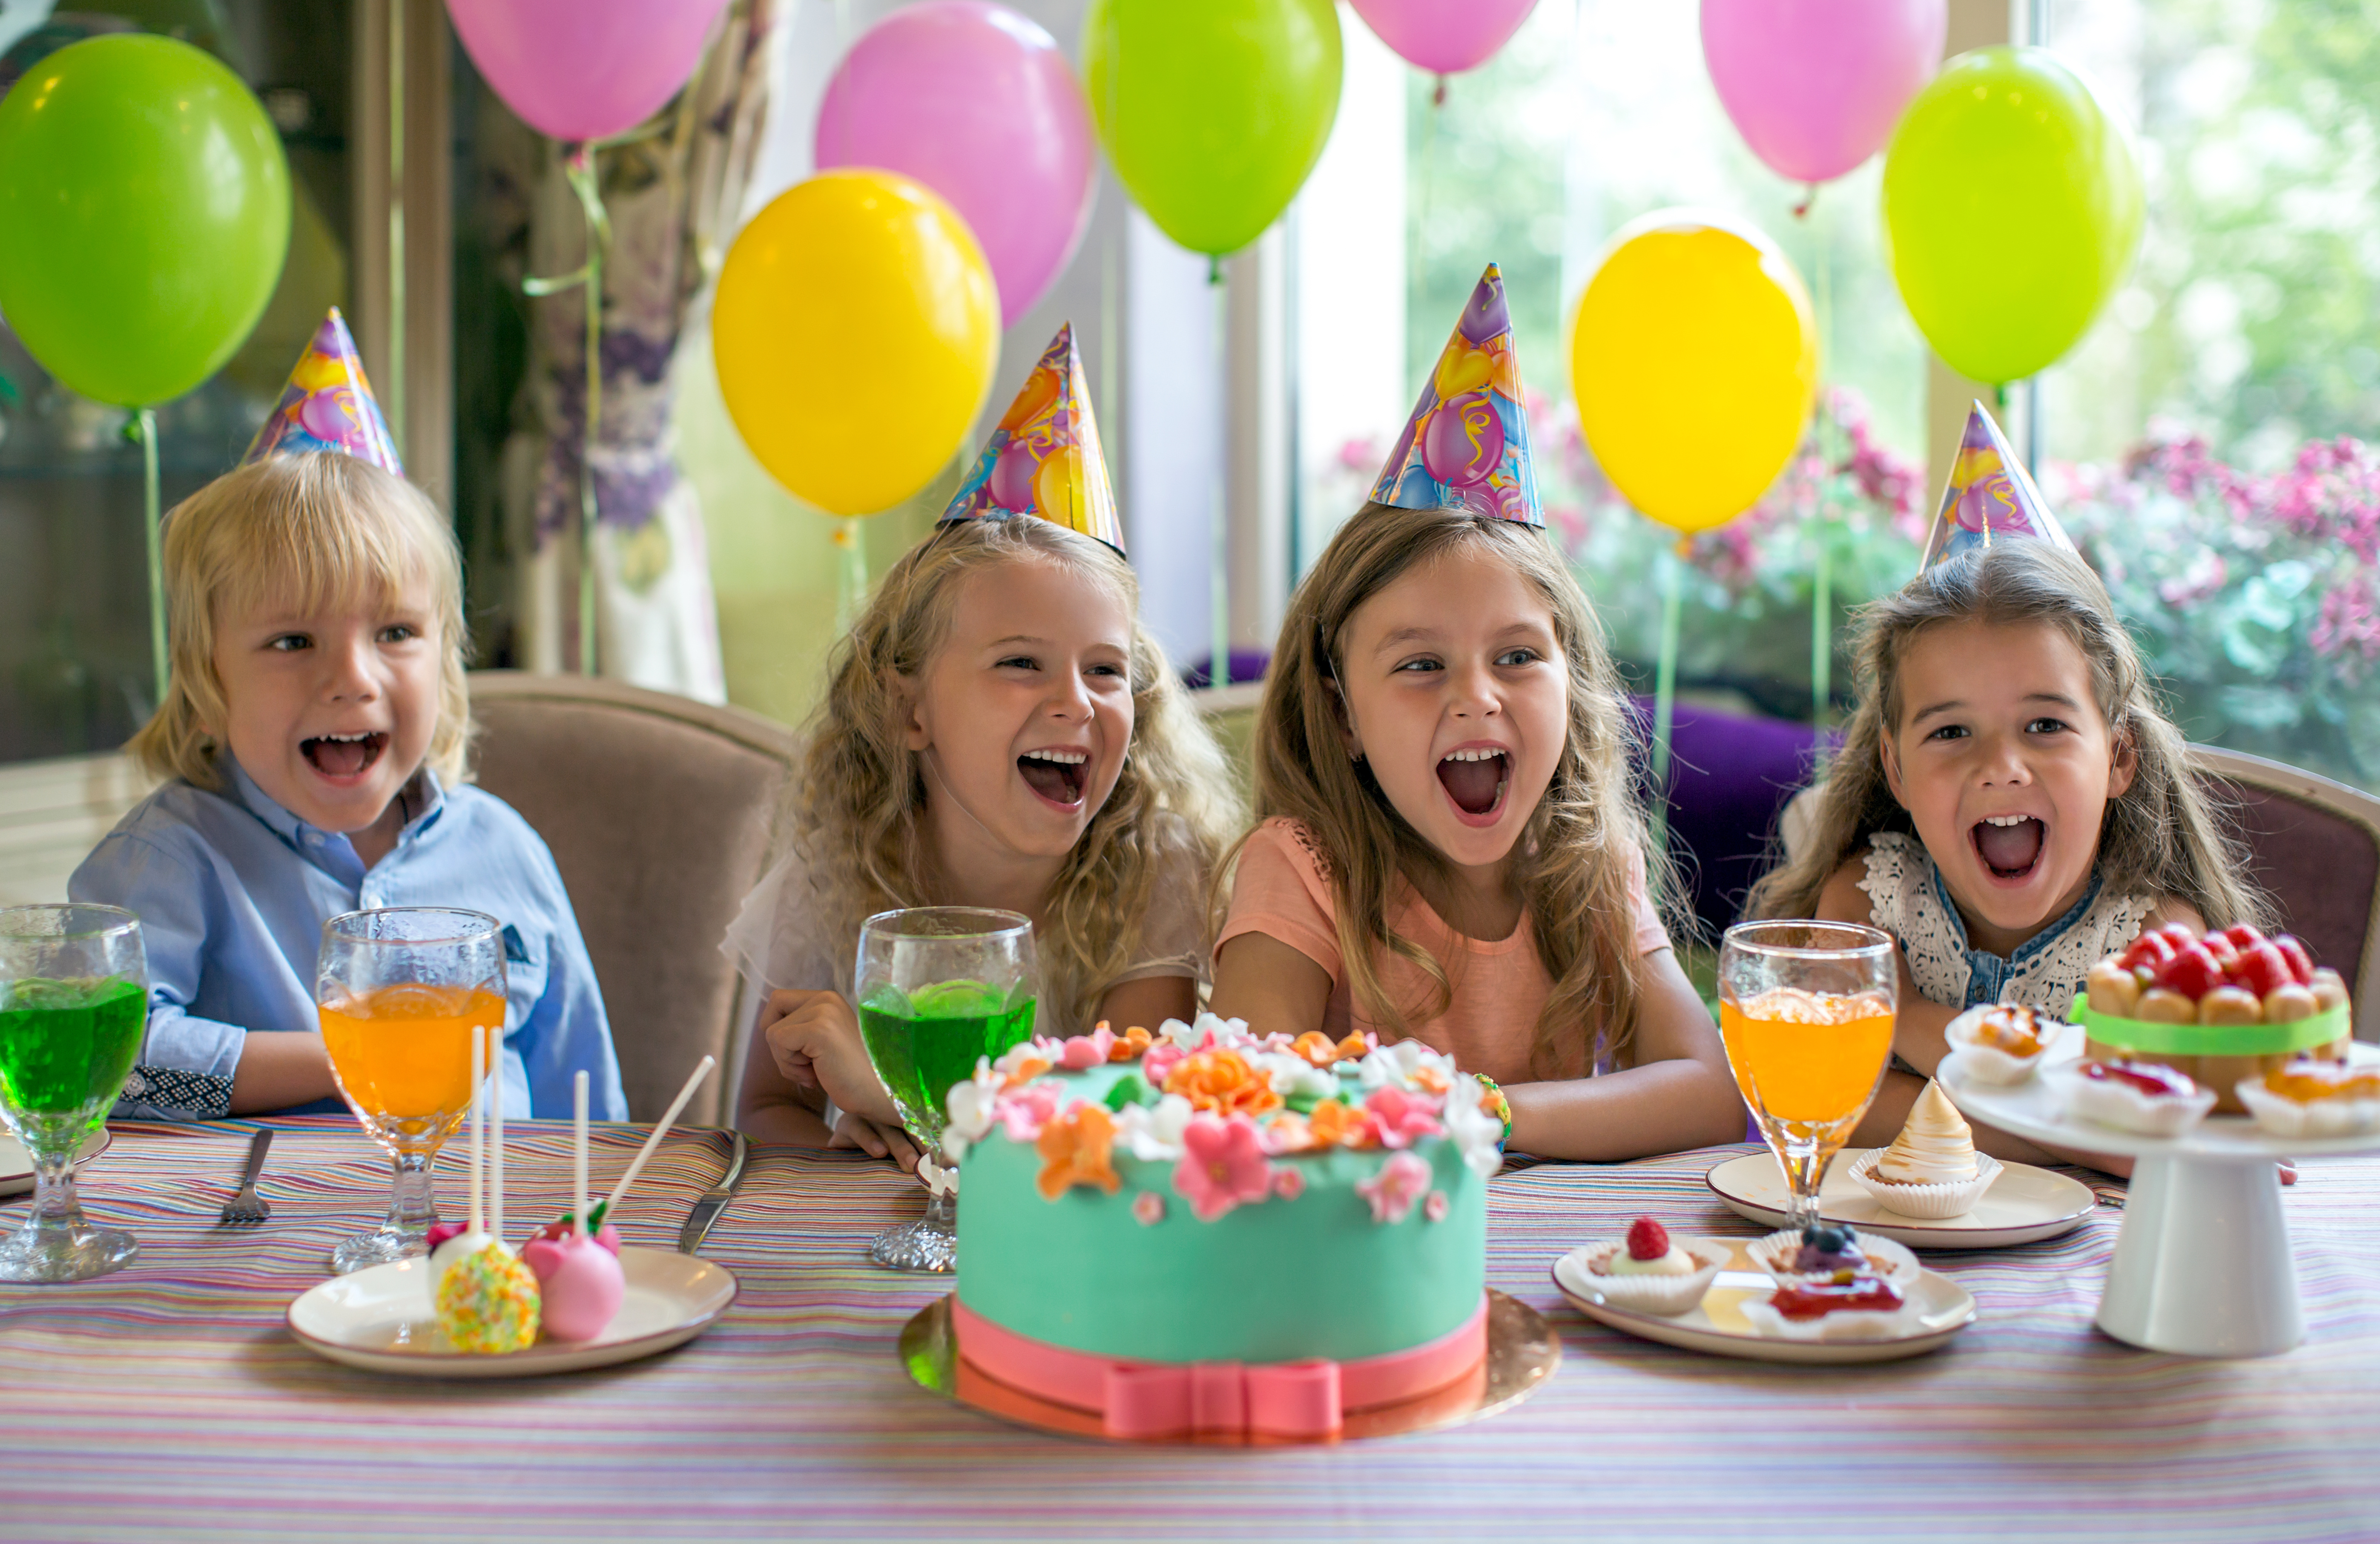 8 awesome kids birthday party ideas in Edmonton